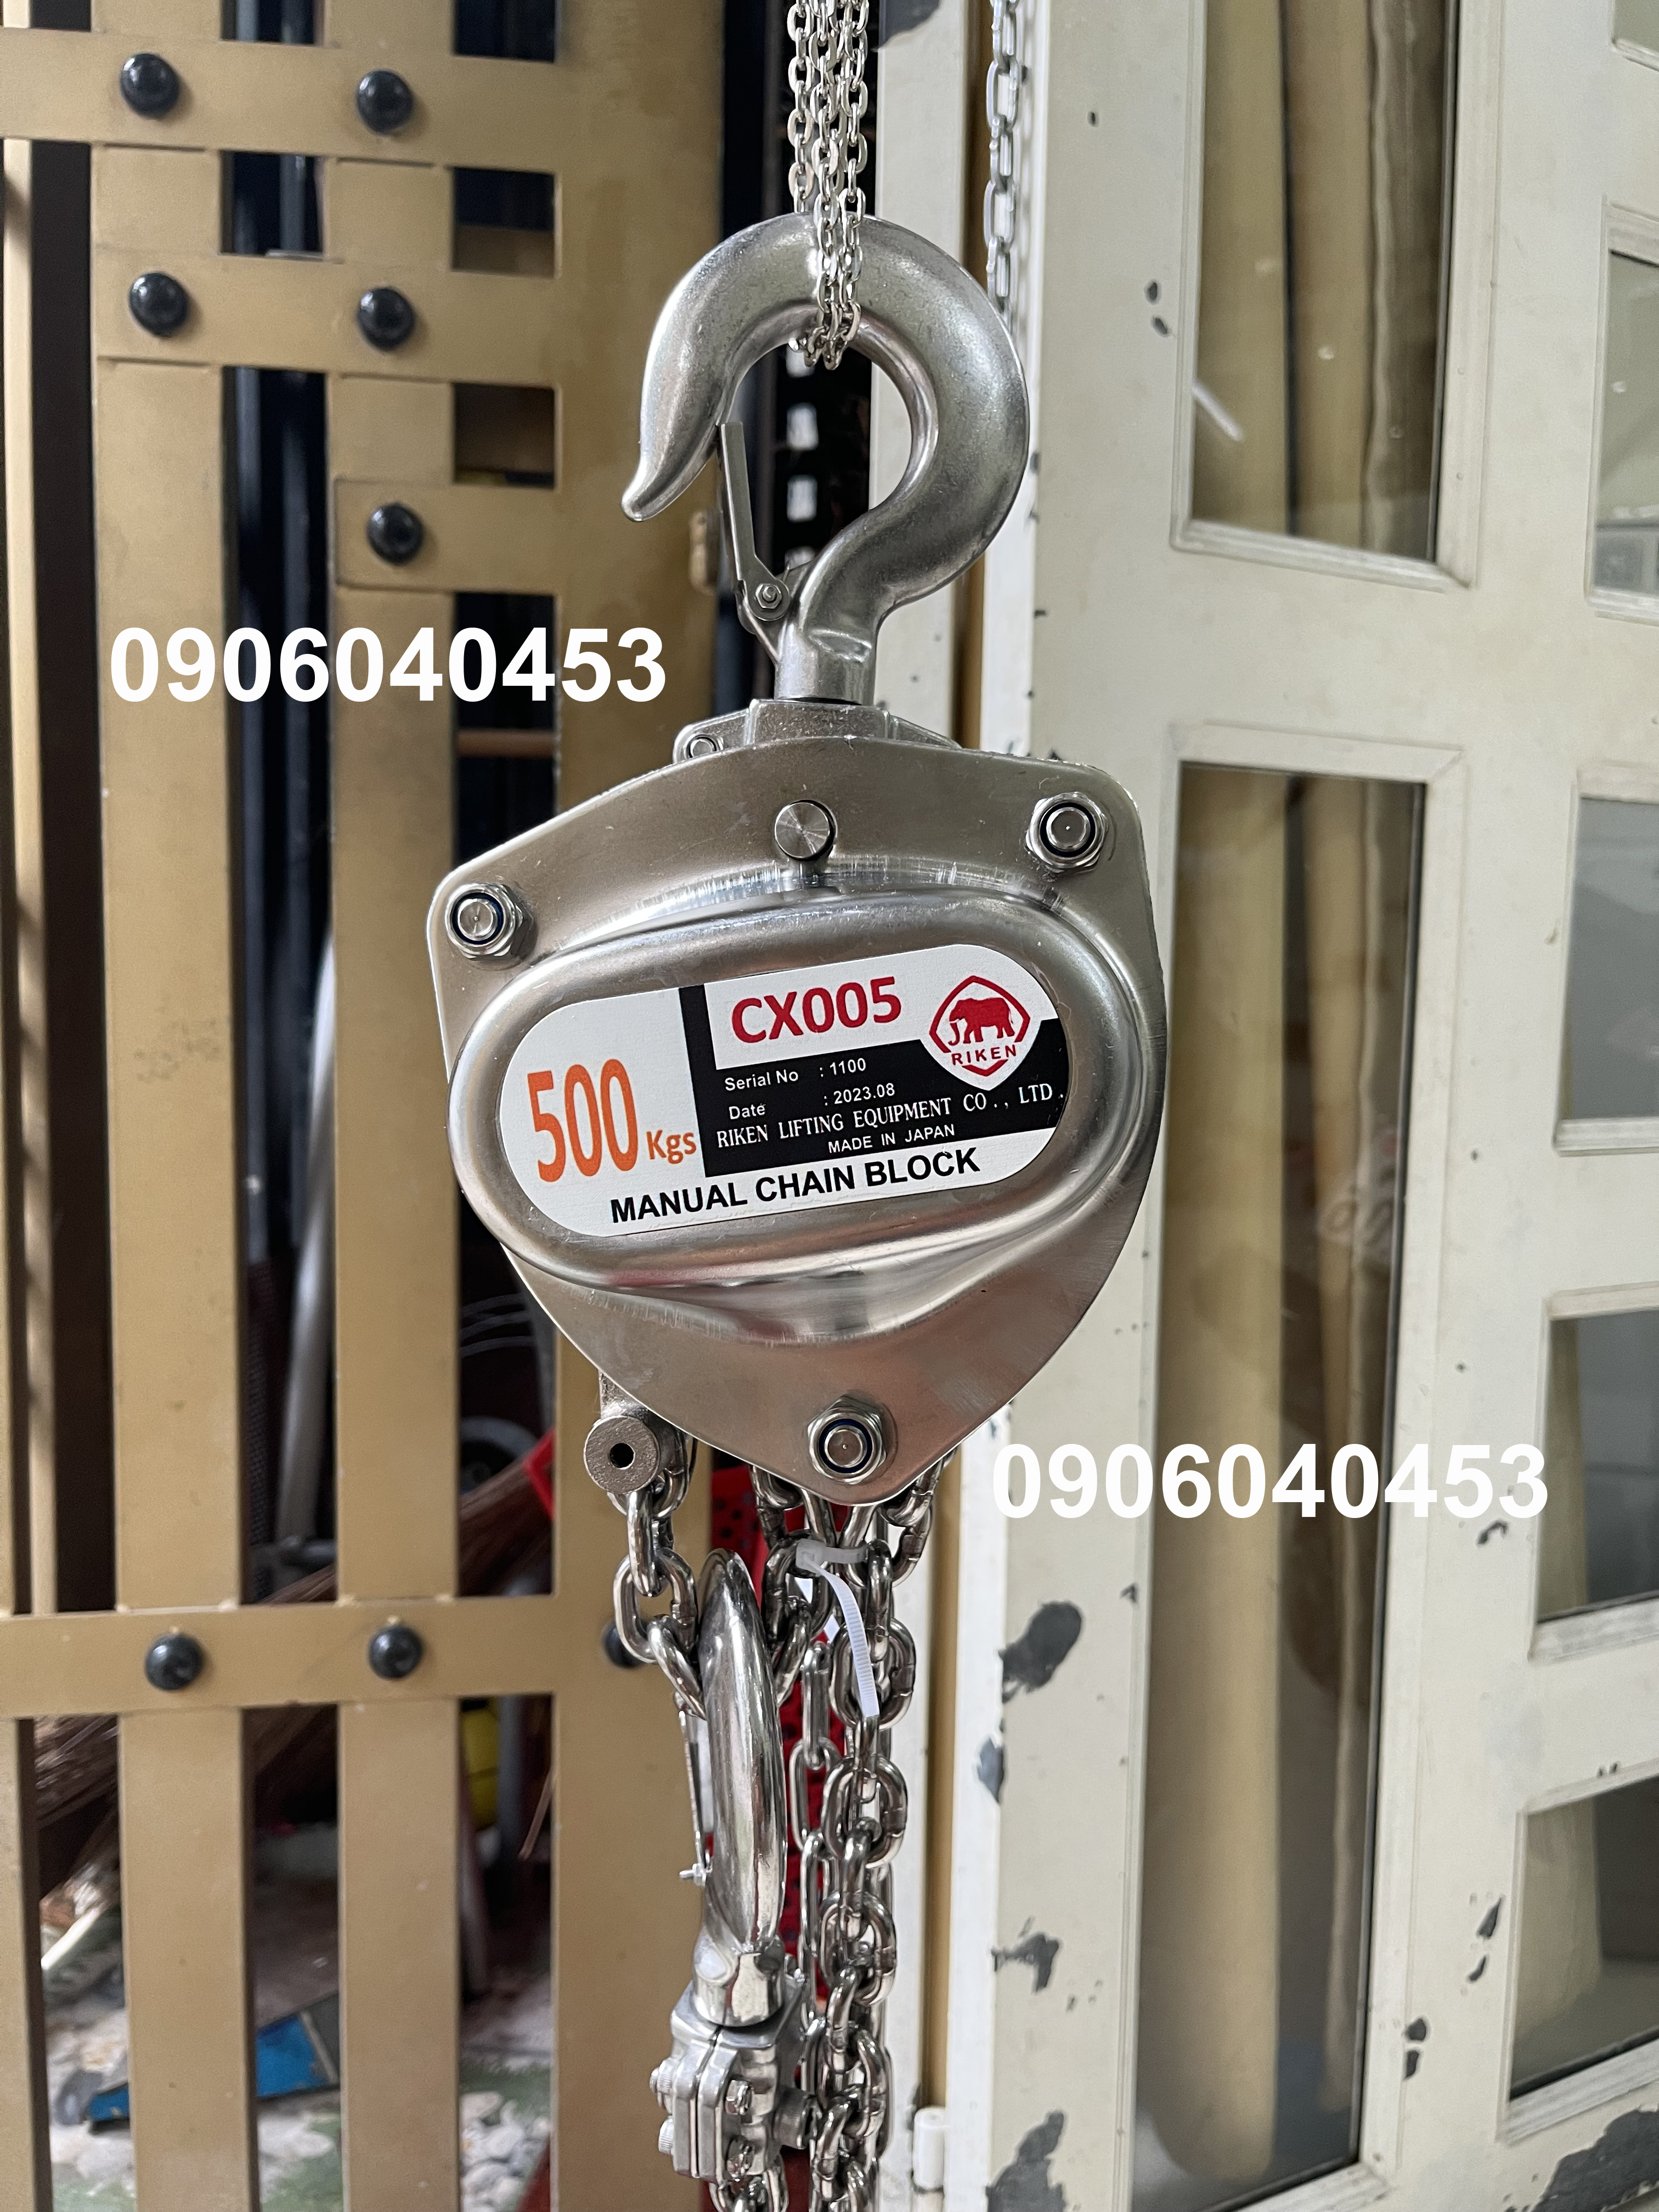 Pa lăng kéo tay inox 304 Riken 500kg CX005/ 500kgs stainless steel chain hoist CX005